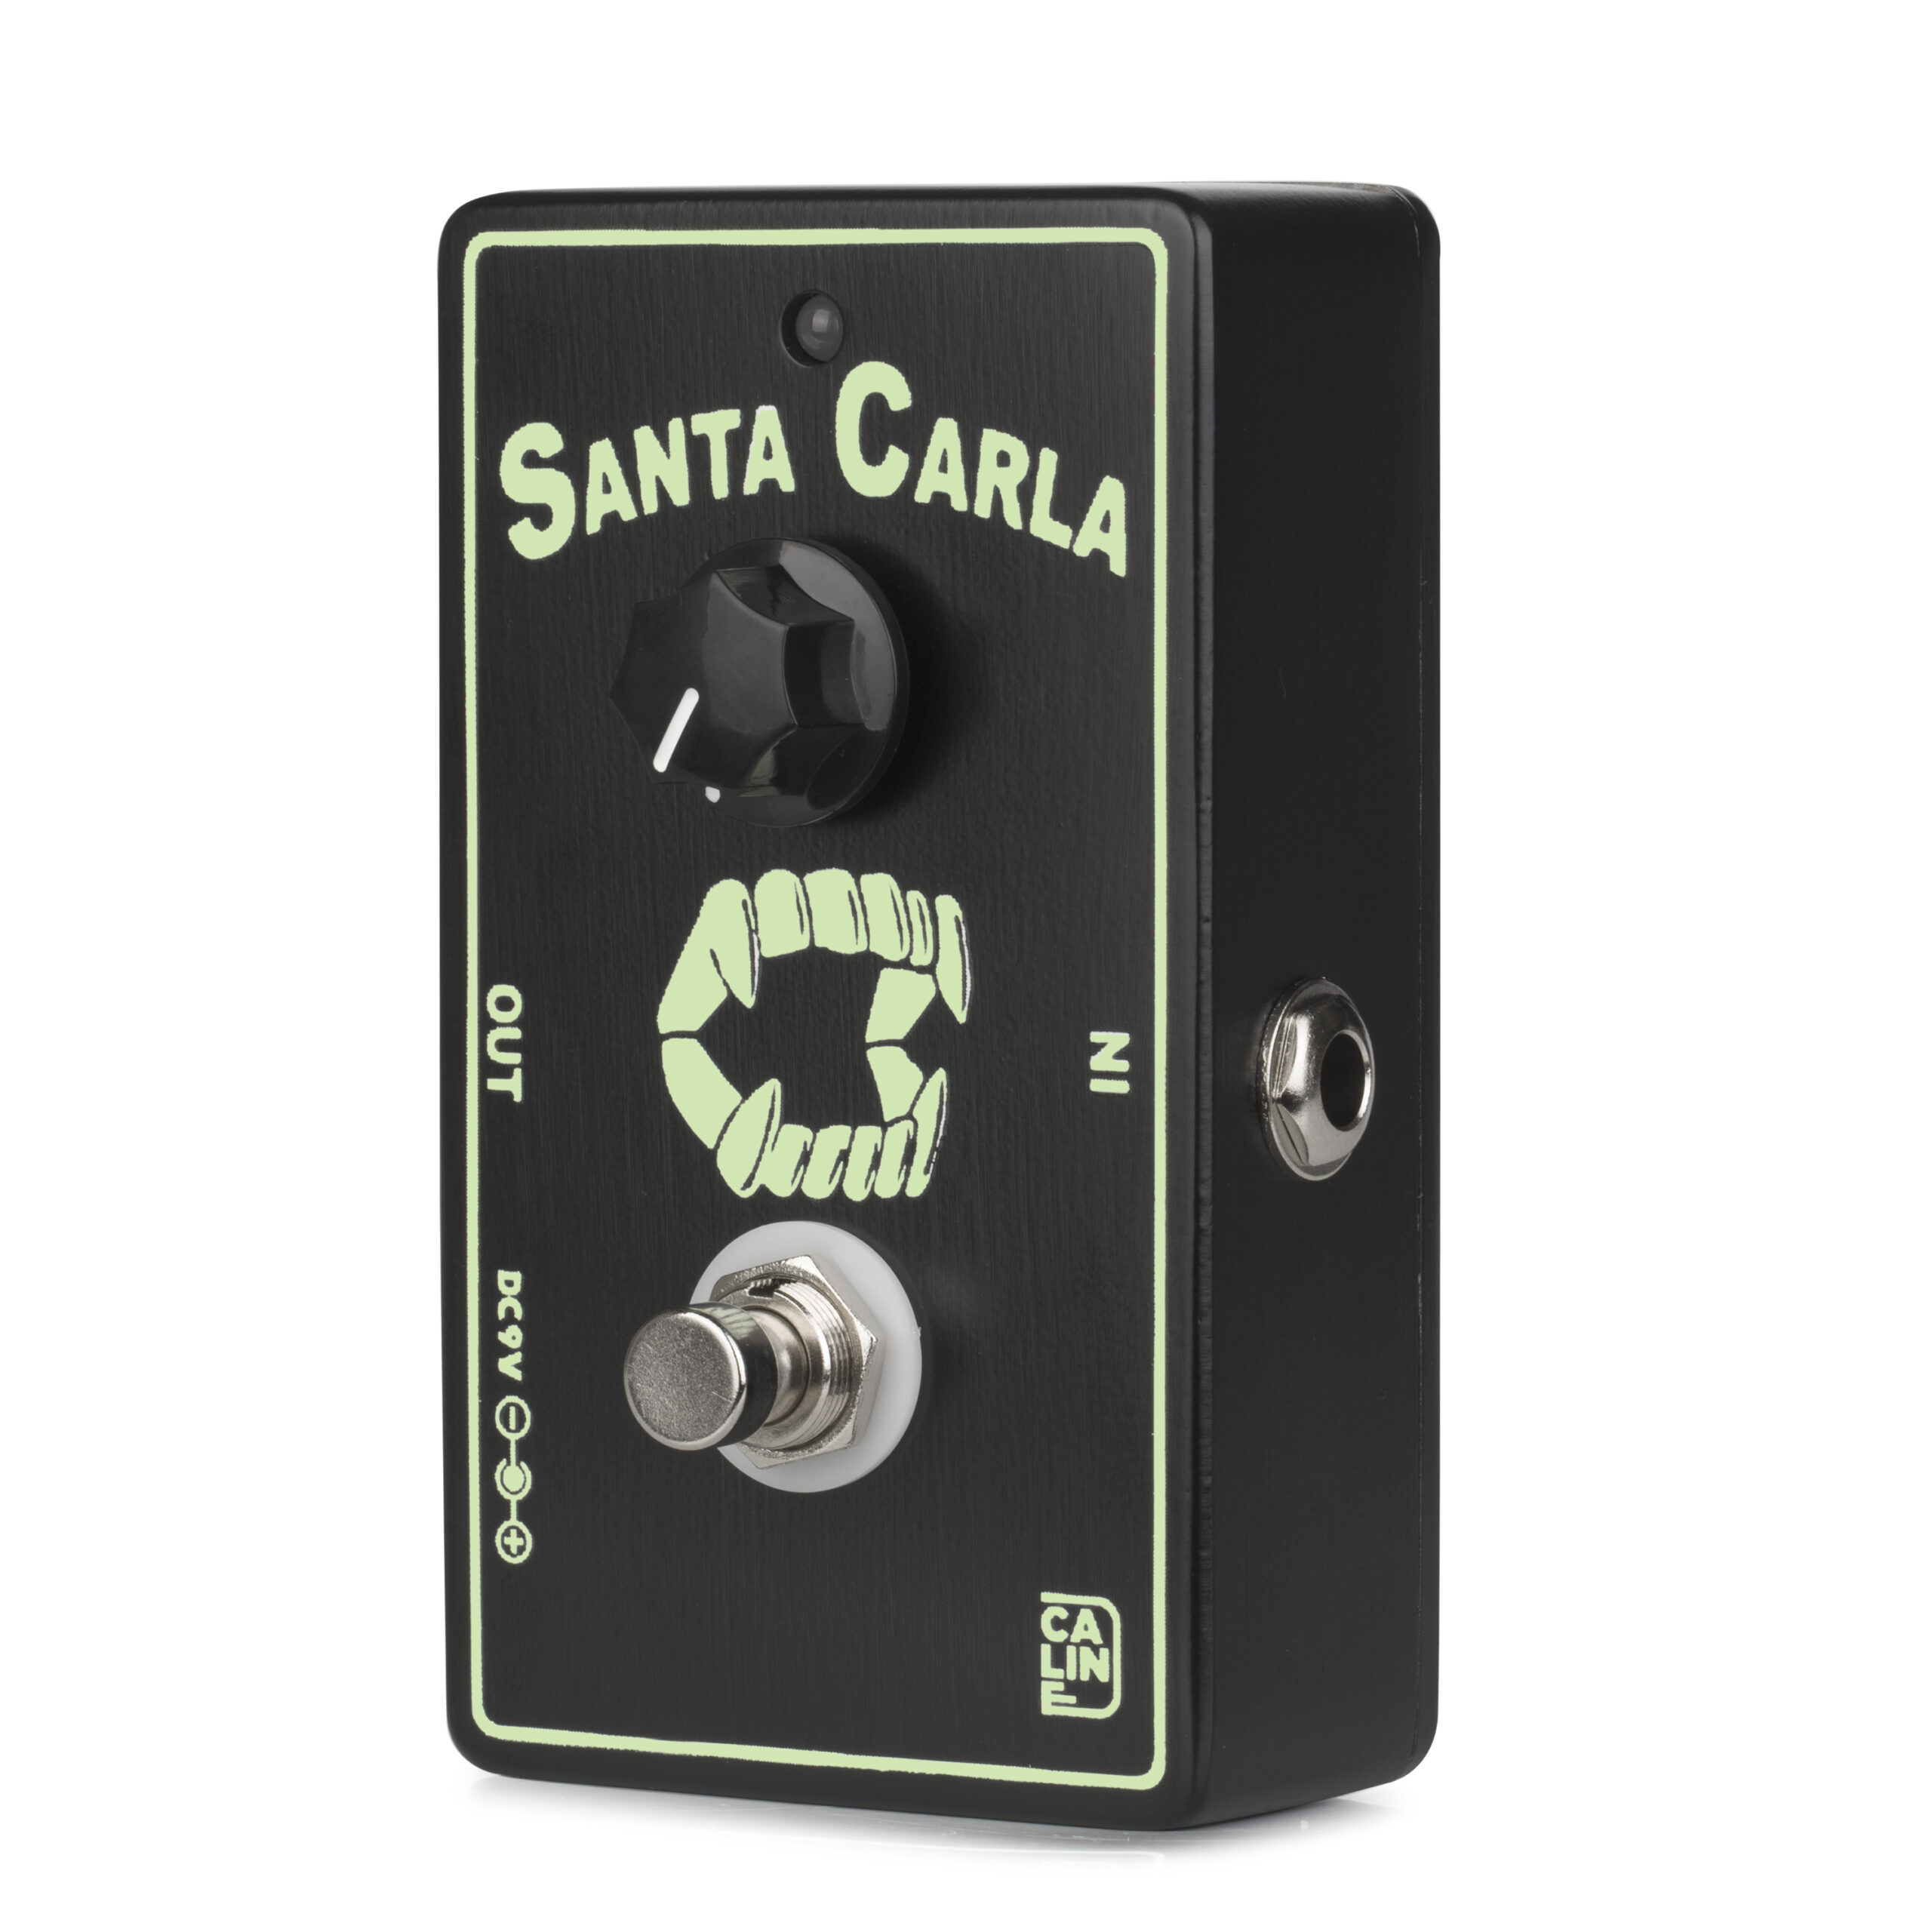 Caline Cp514 Santa Carla Boost - Volume, boost & expression effect pedal - Variation 1